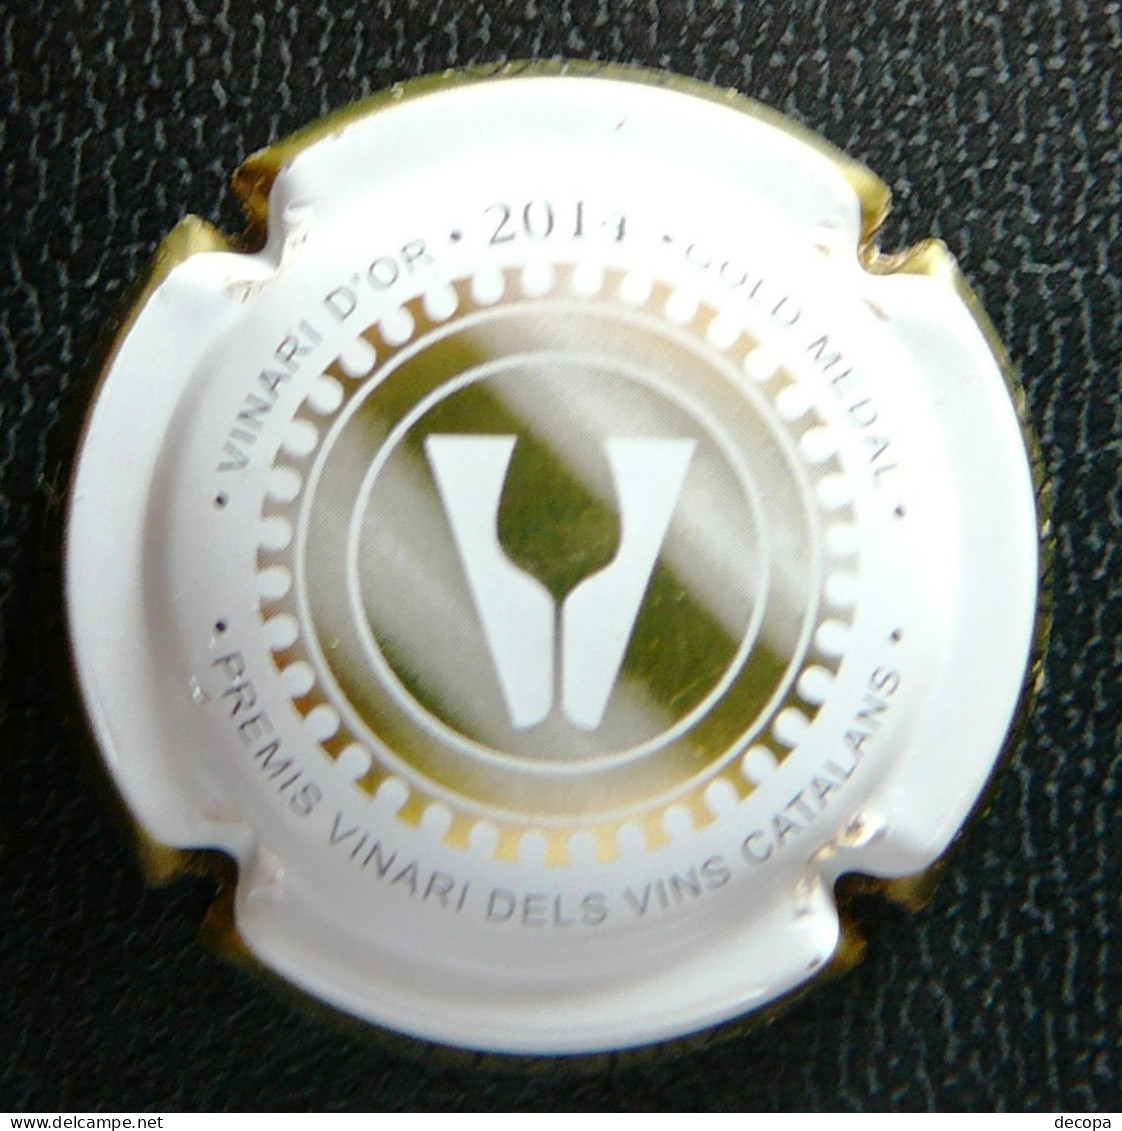 (dc-057) Capsule Cava Pere Olivella Galimany - Gold Medal 2014   -  Placa Premis Vinari Dels Vins Catalans - Sparkling Wine